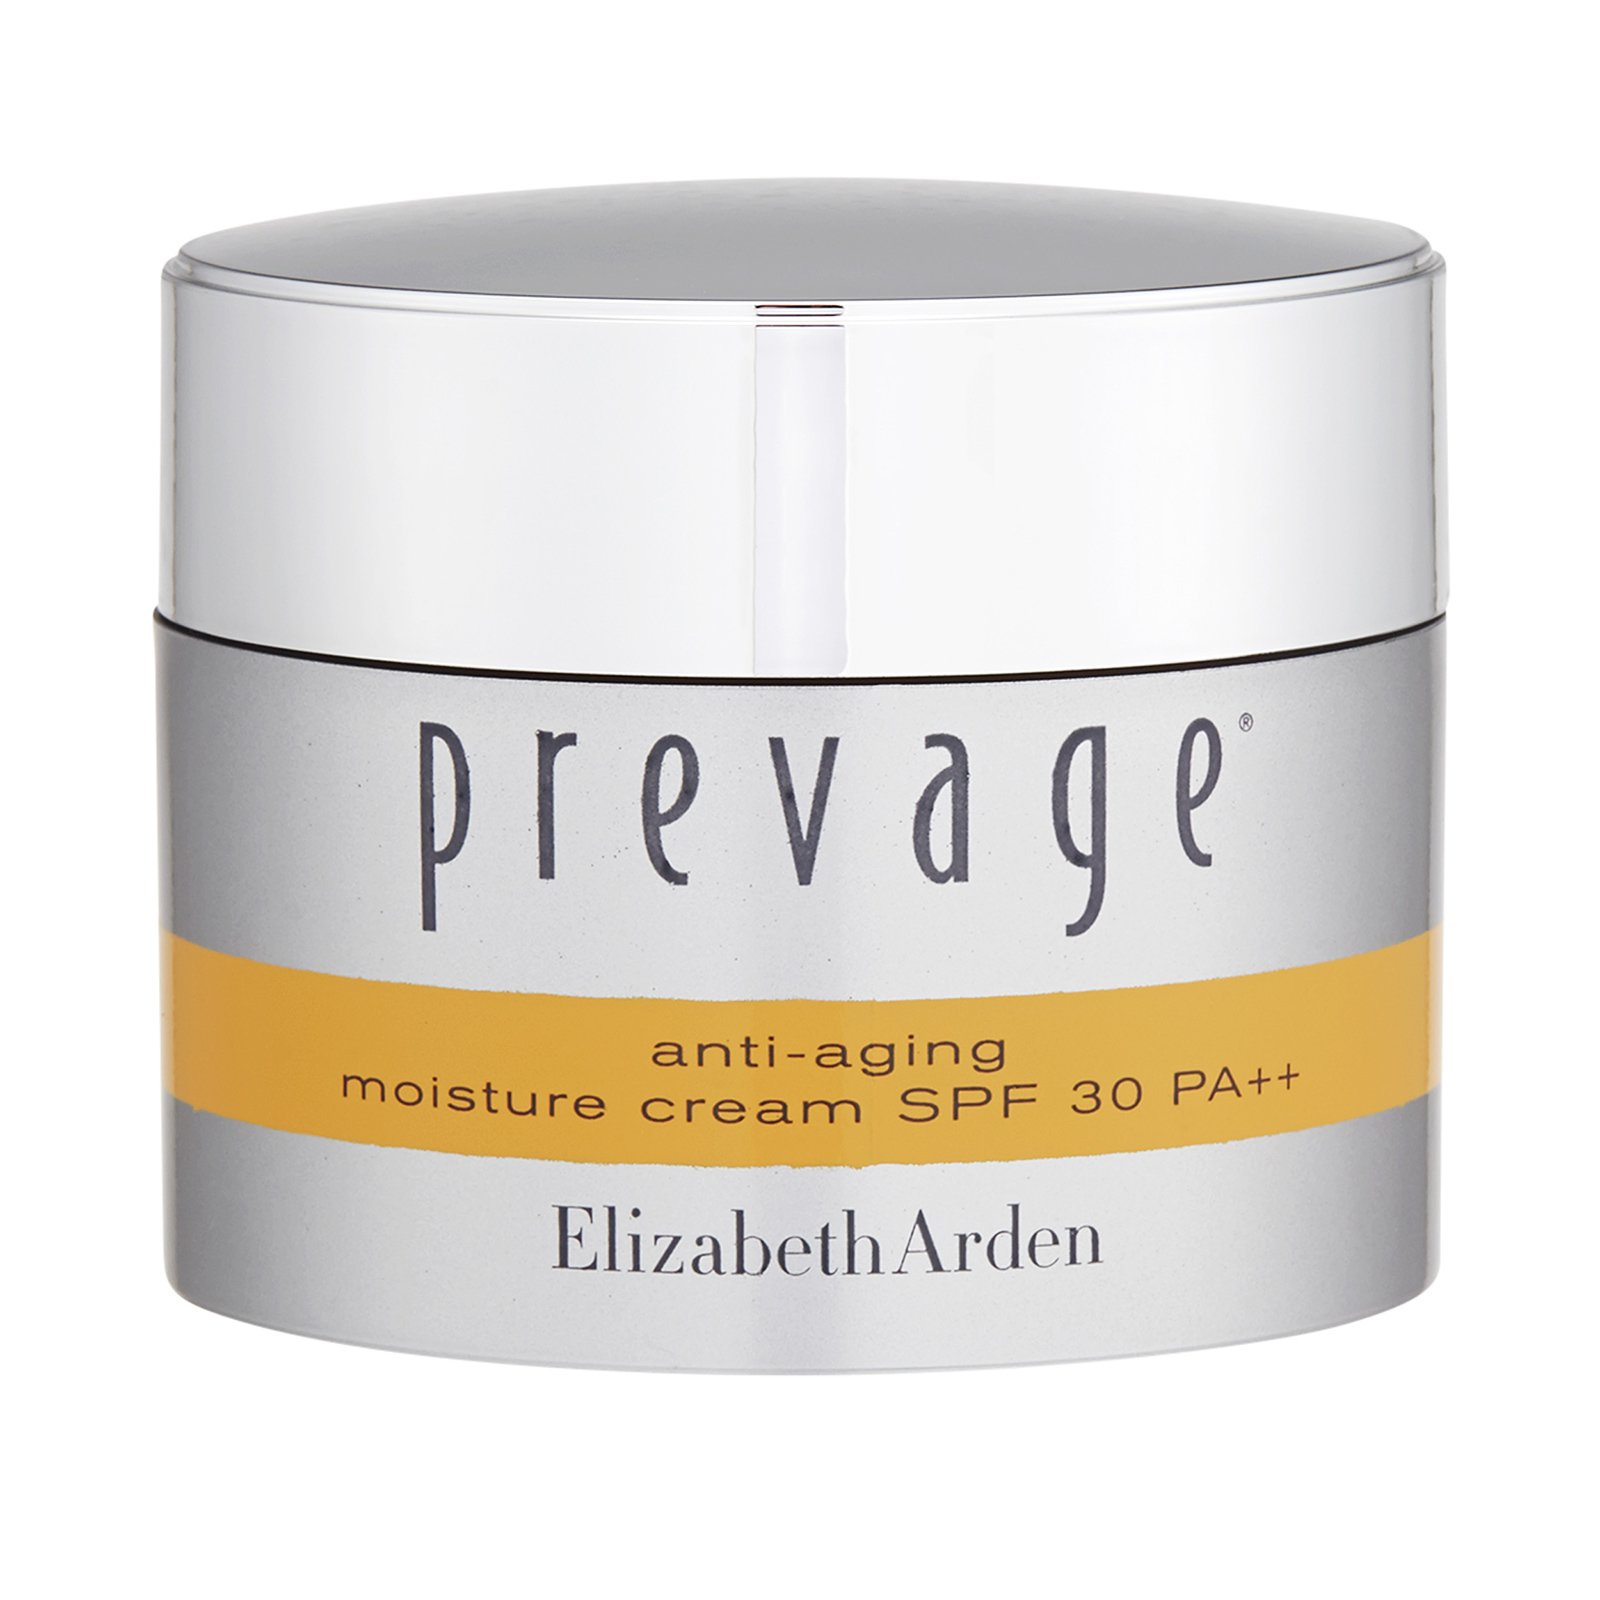 Prevage Anti-Aging Moisture Cream SPF 30 / PA++